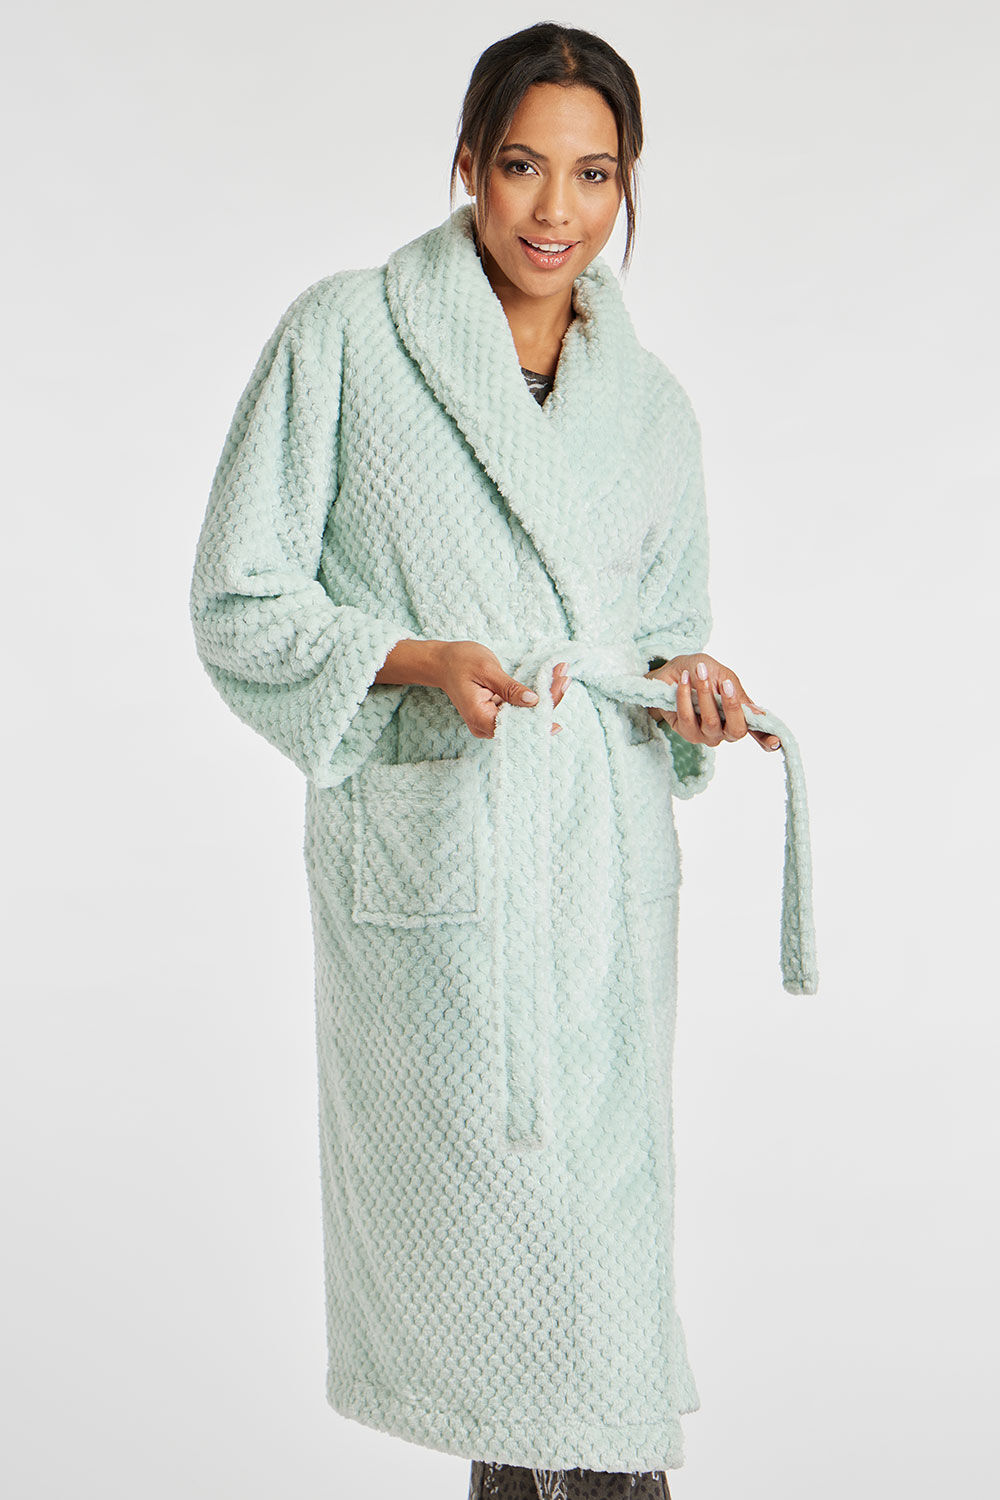 PAVILIA Soft Plush Women Fleece Robe, Black Cozy Bathrobe, Female Long Spa  Robe, Warm Housecoat, Satin Waffle Trim, S/M - Walmart.com